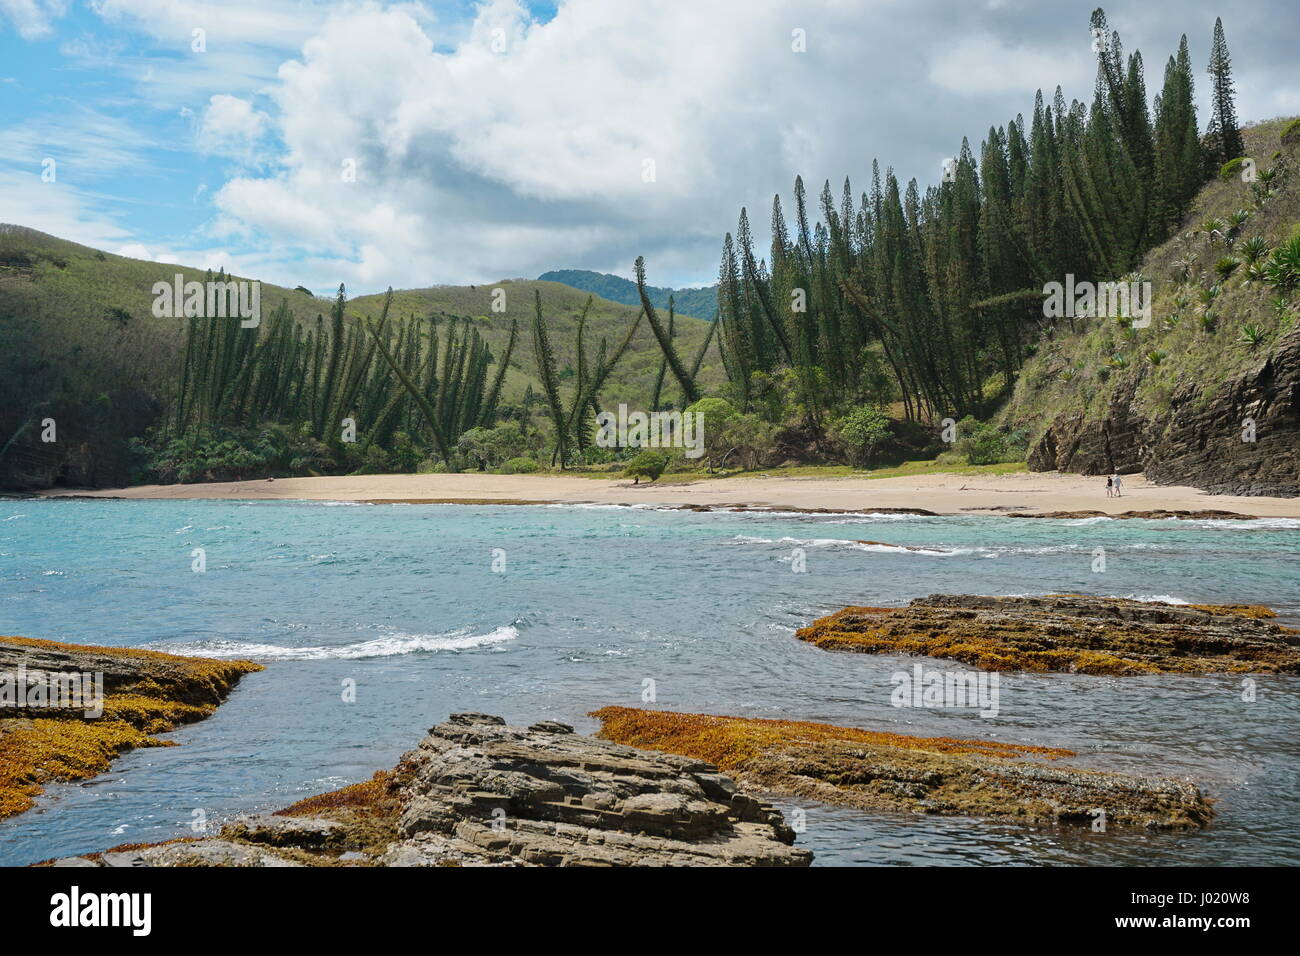 New Caledonia coastline, beach with Araucaria pines in Turtle bay, Bourail, Grande Terre island, south Pacific Stock Photo